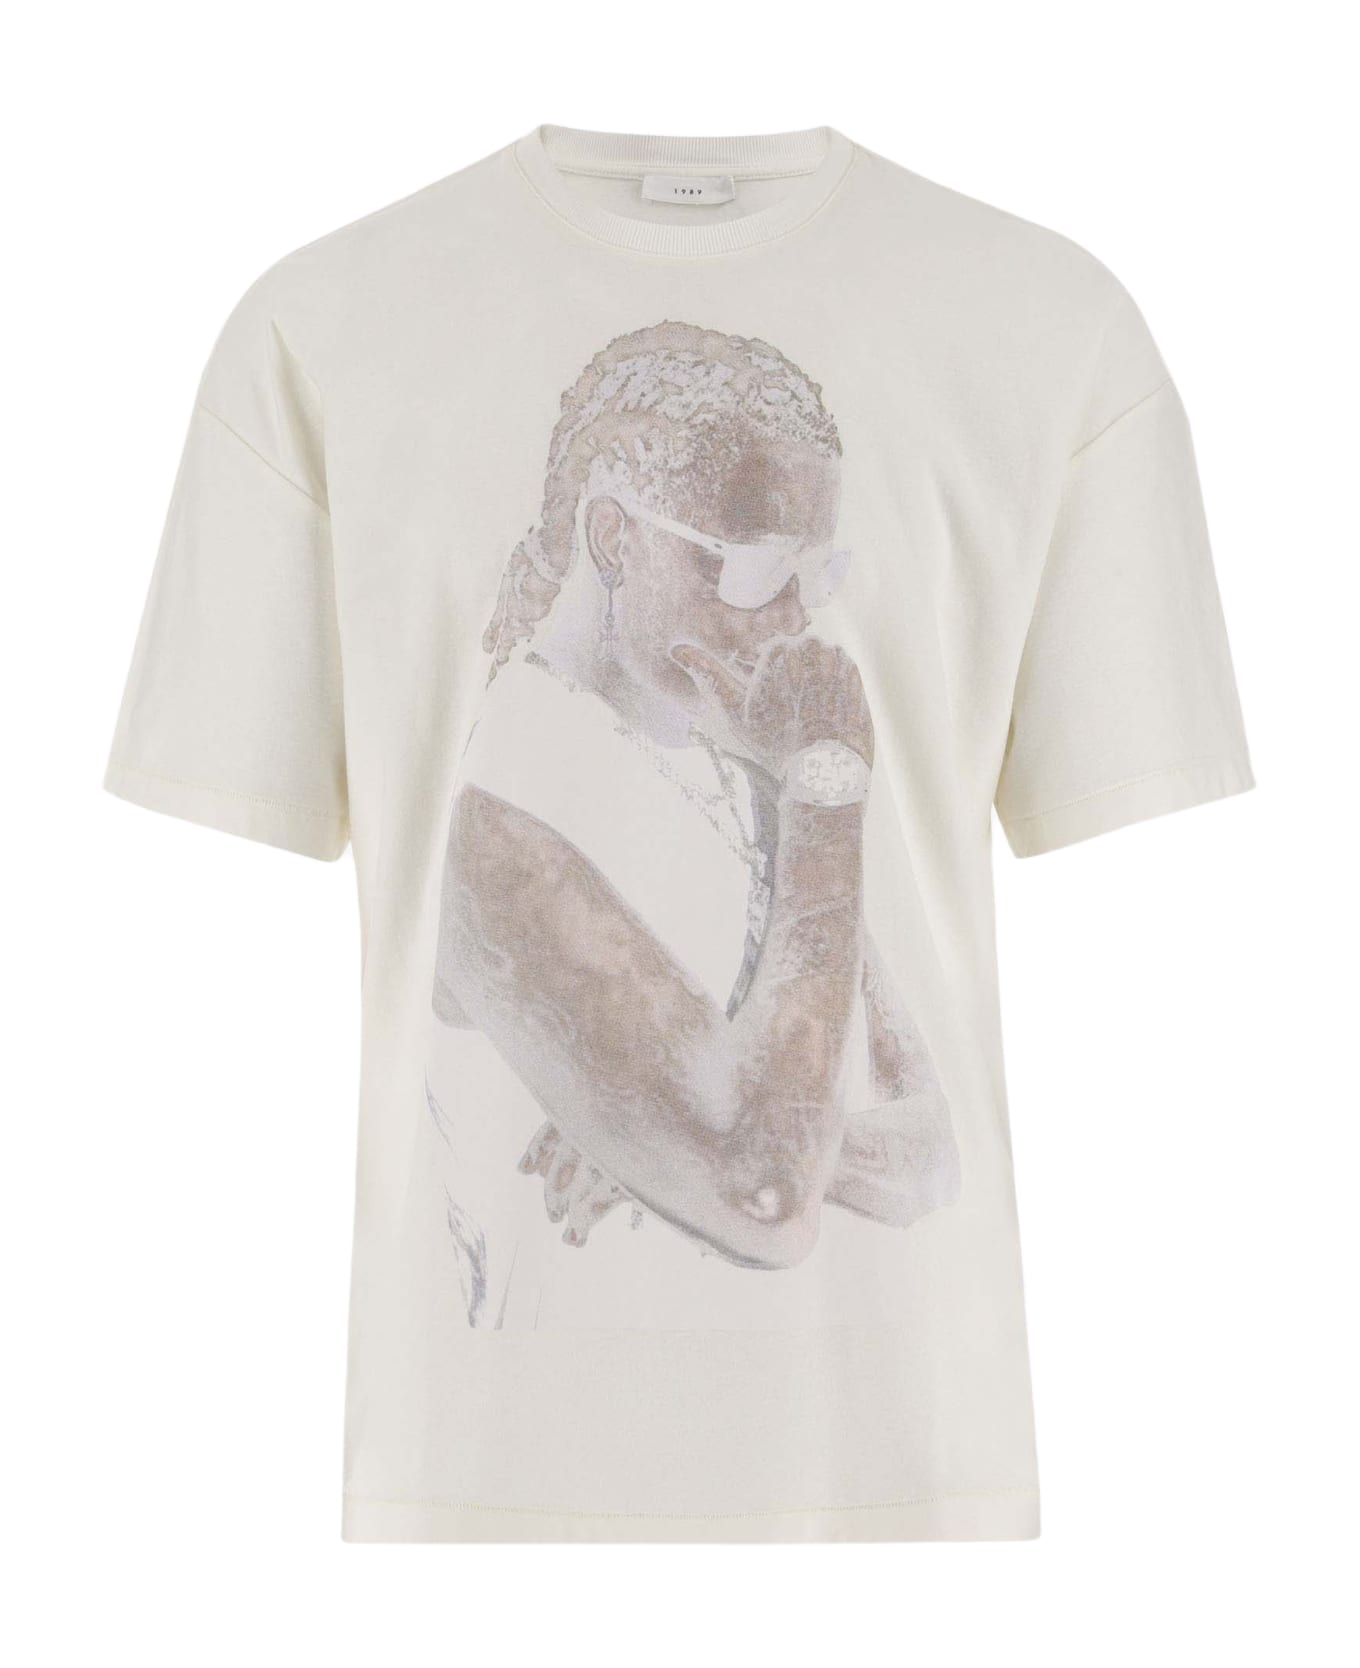 1989 Studio Cotton T-shirt With Graphic Print - VINTAGE WHITE